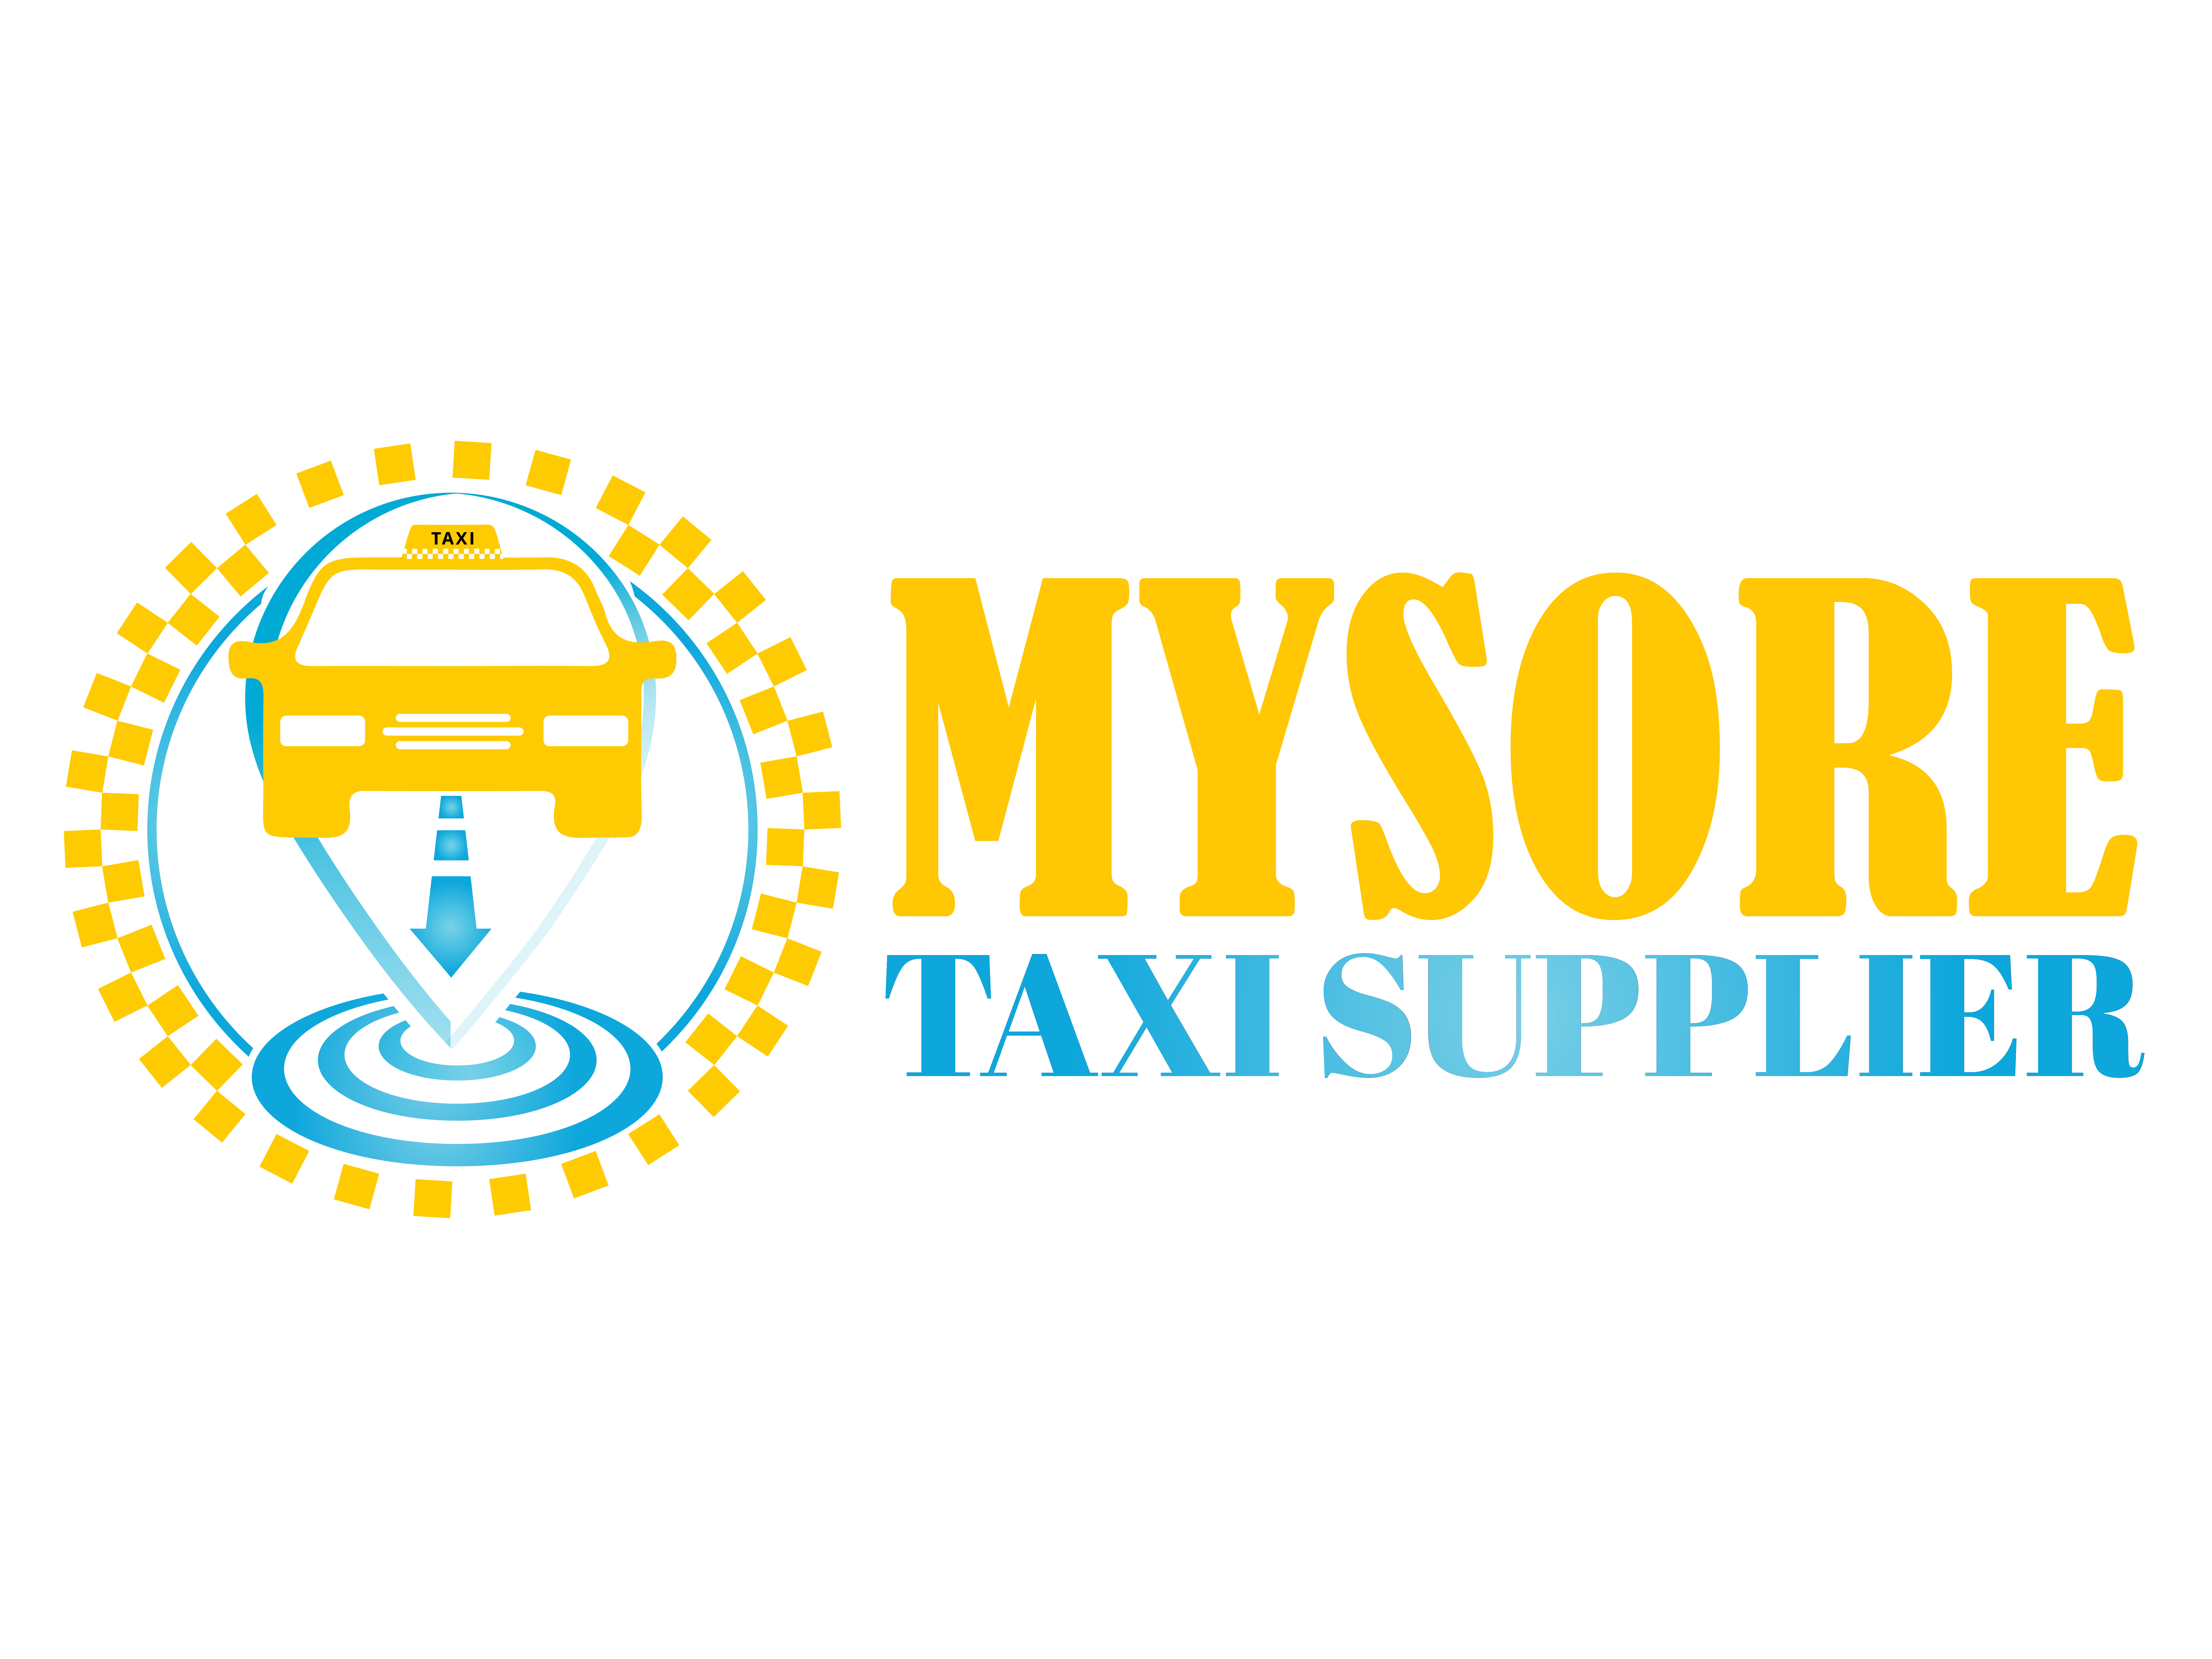 Mysore Taxi Services | Book Cab Services in Mysore With Mysore Taxi Supplier